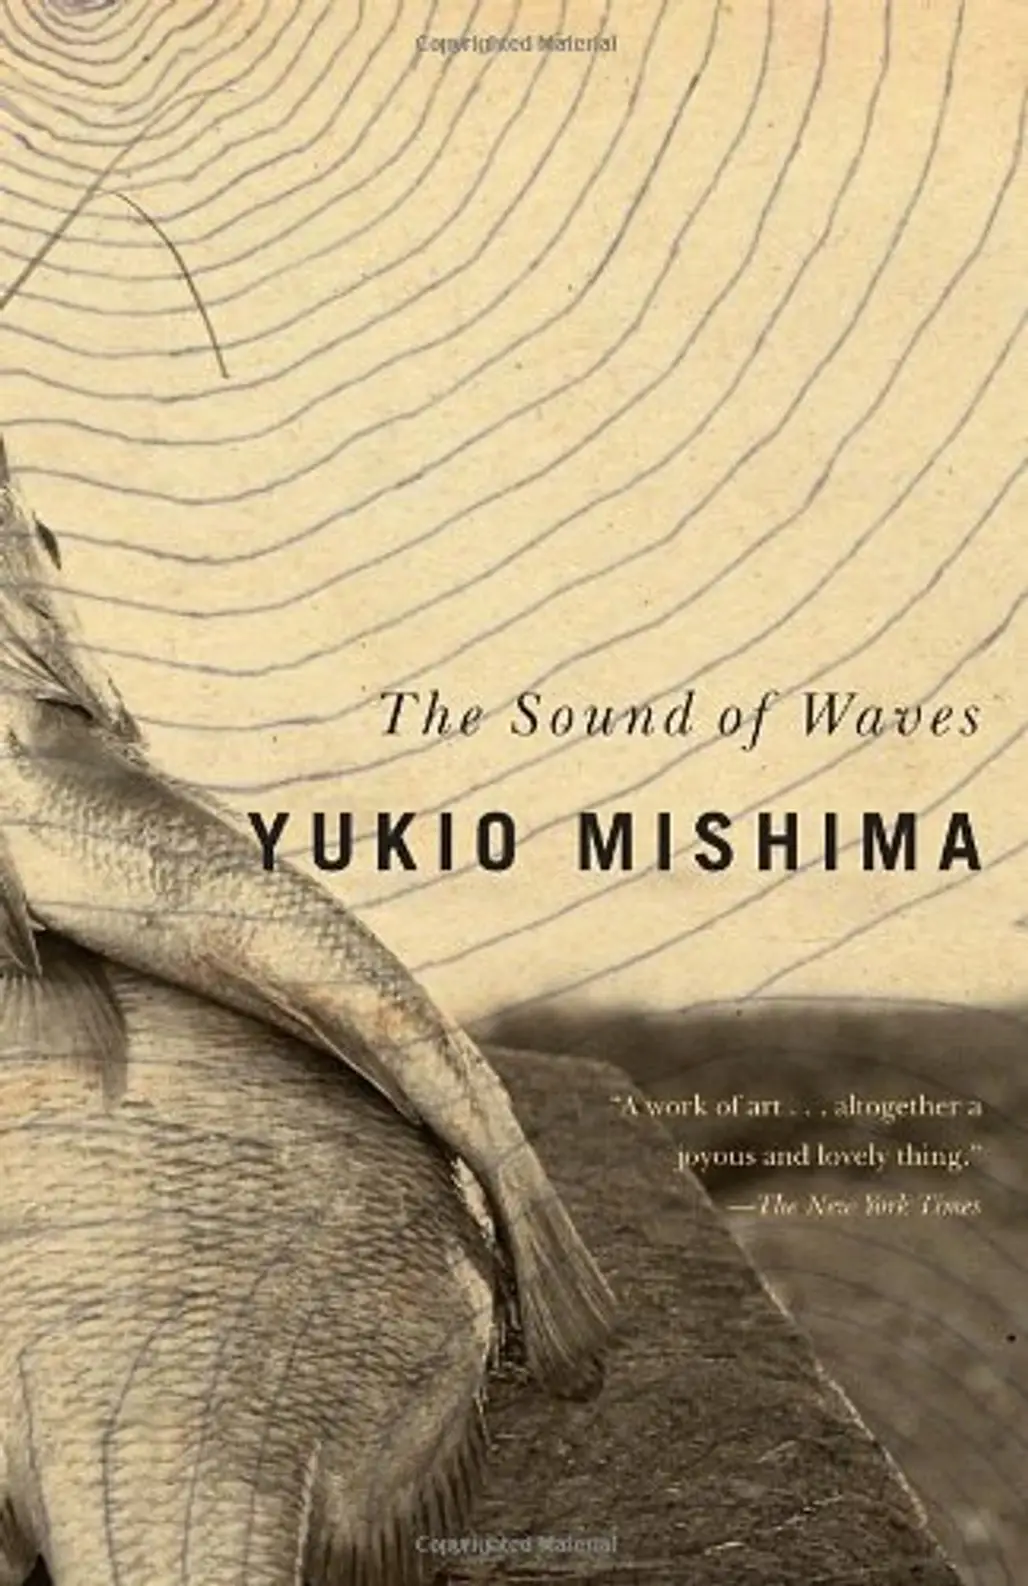 The Sound of Waves – Yukio Mishima